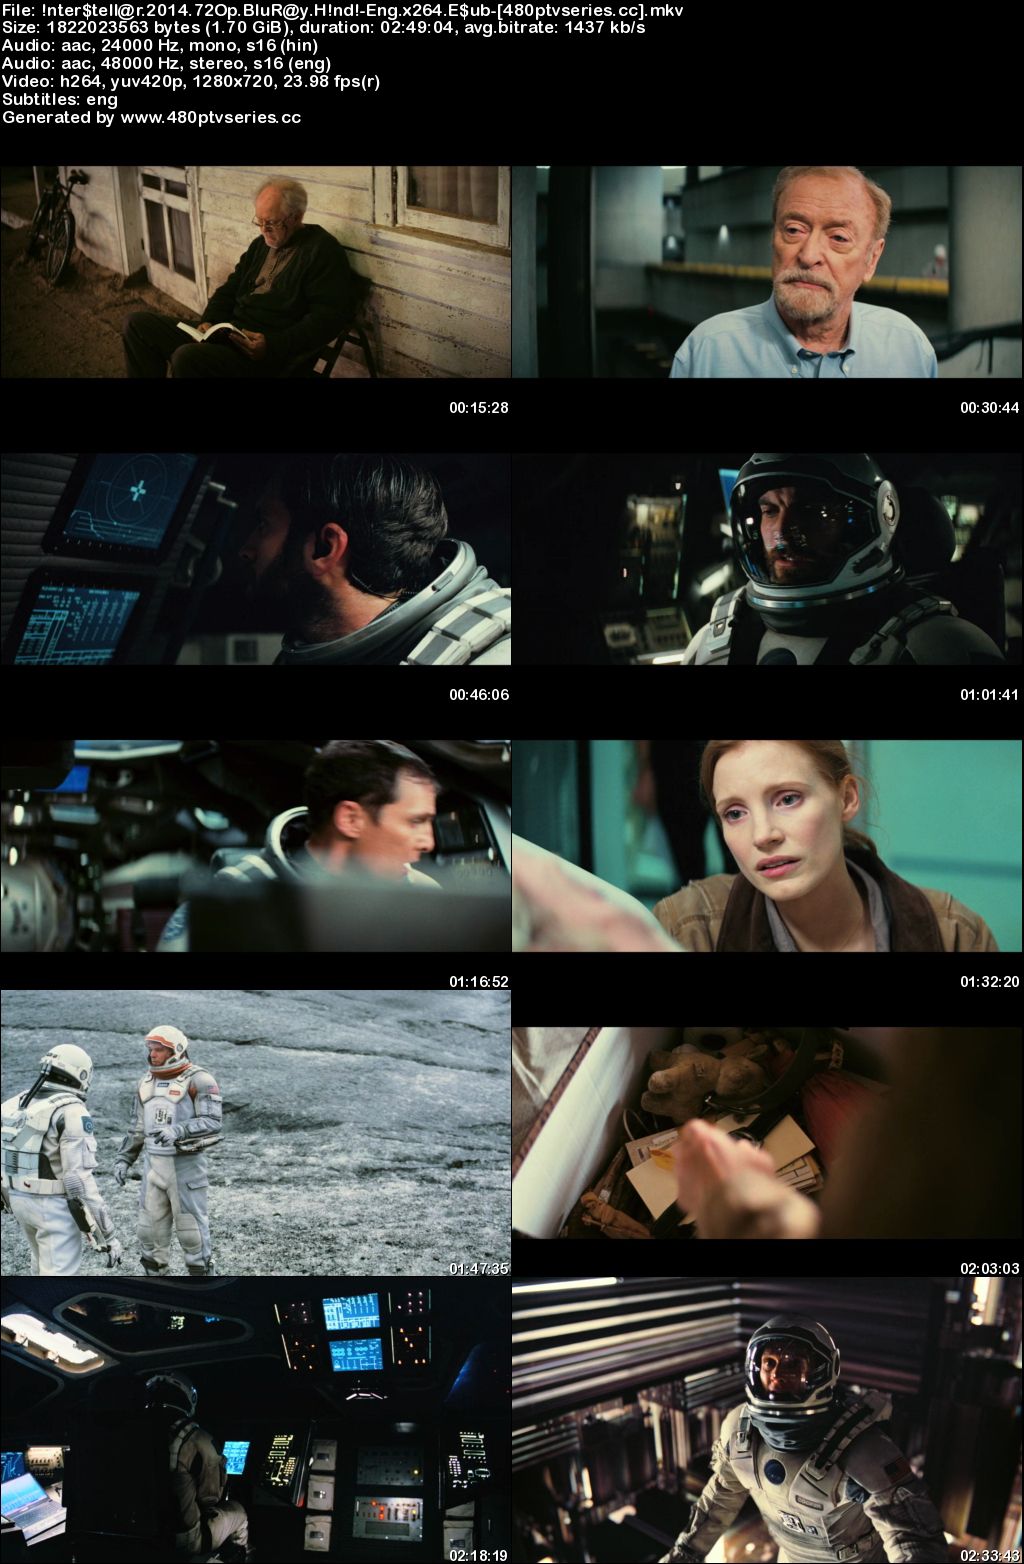 Interstellar (2014) Full Hindi Dual Audio Movie Download 480p 720p Bluray Free Watch Online Full Movie Download Worldfree4u 9xmovies